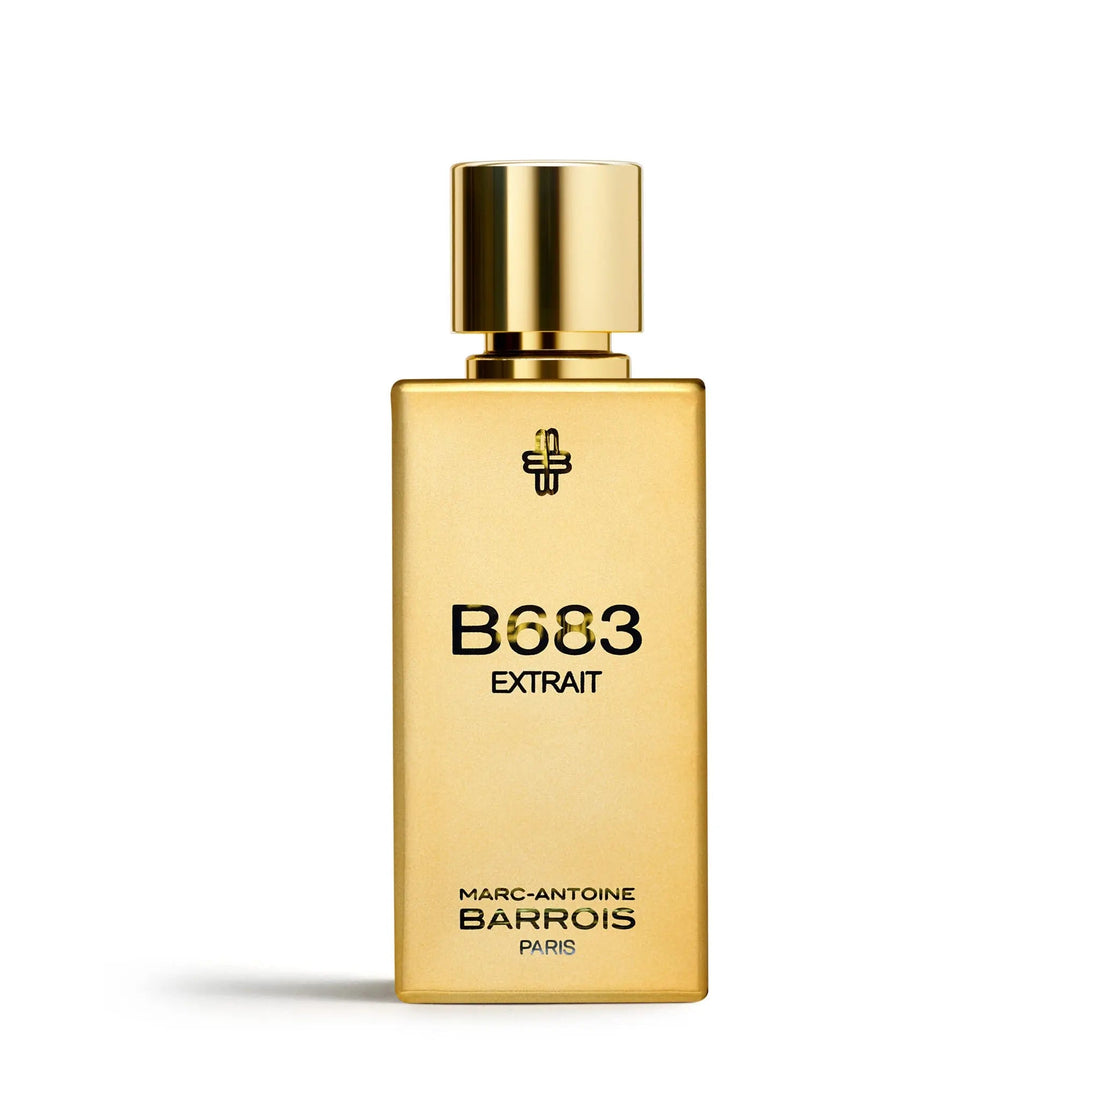 Barrois B683 Perfume extract - 50 ml